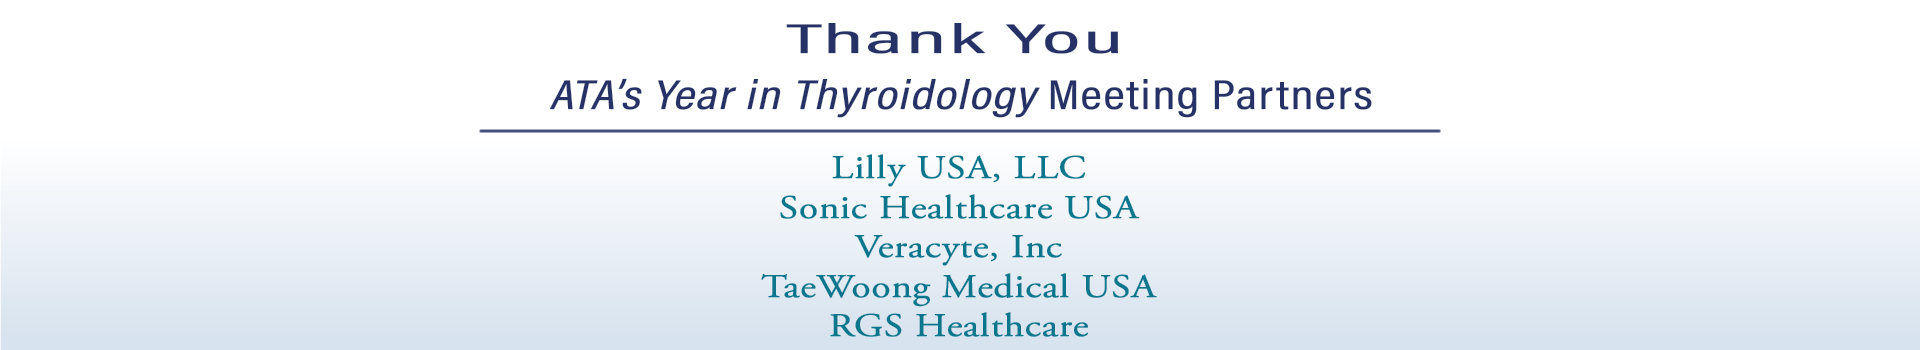 Thank you ATA Year in Thyroidology Meeting Partners